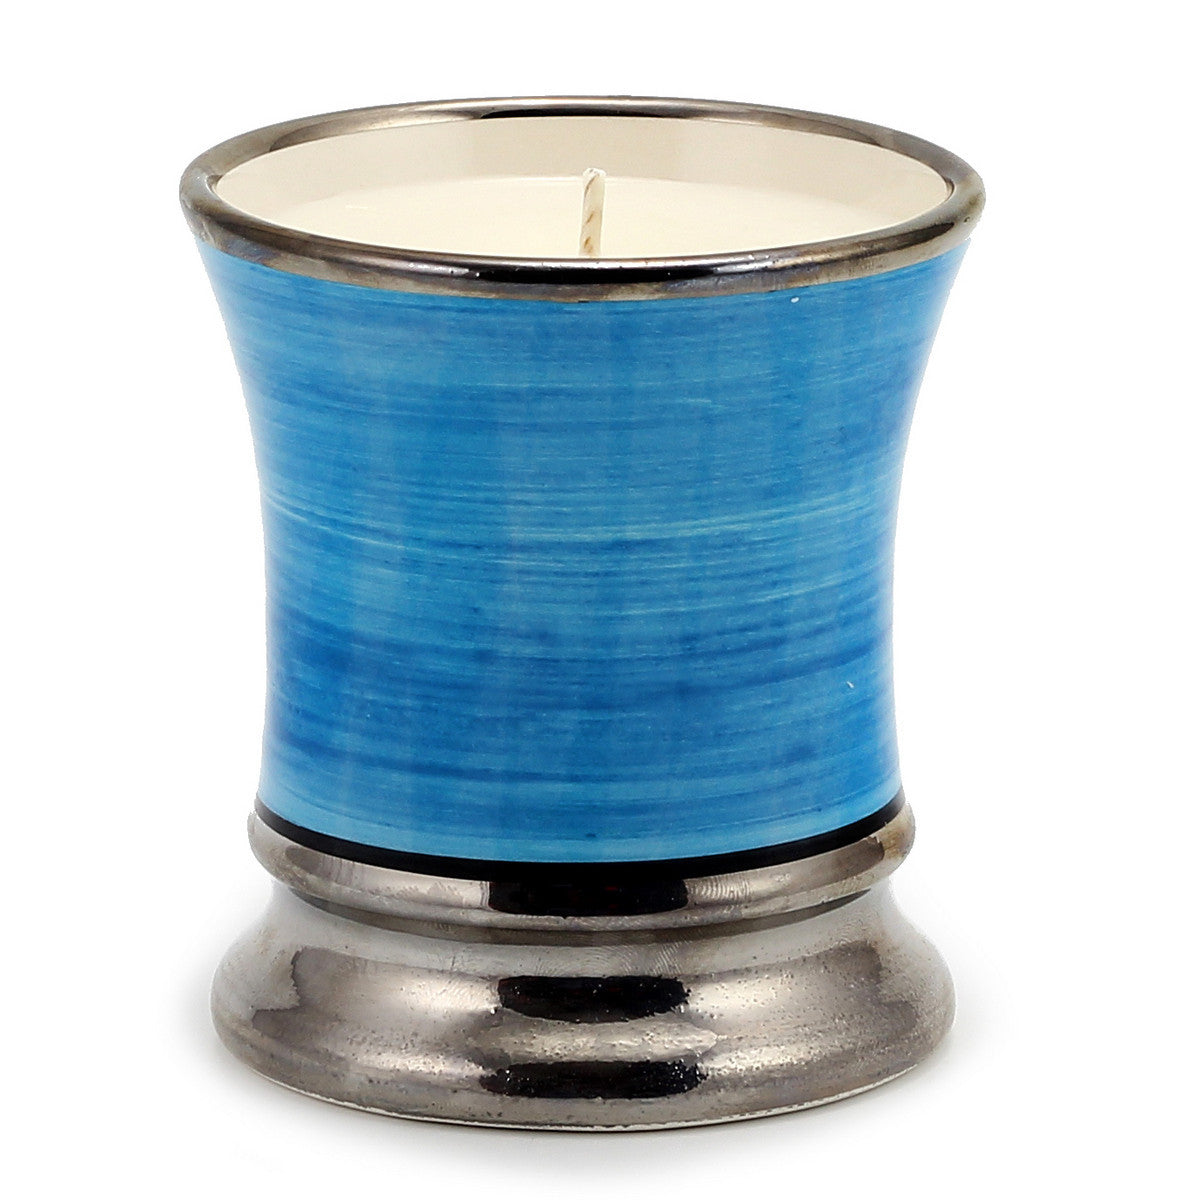 DERUTA CANDLES: Deluxe Precious Cup Candle ~ Coloris Celeste Design ~ Pure Platinum Rim - Artistica.com